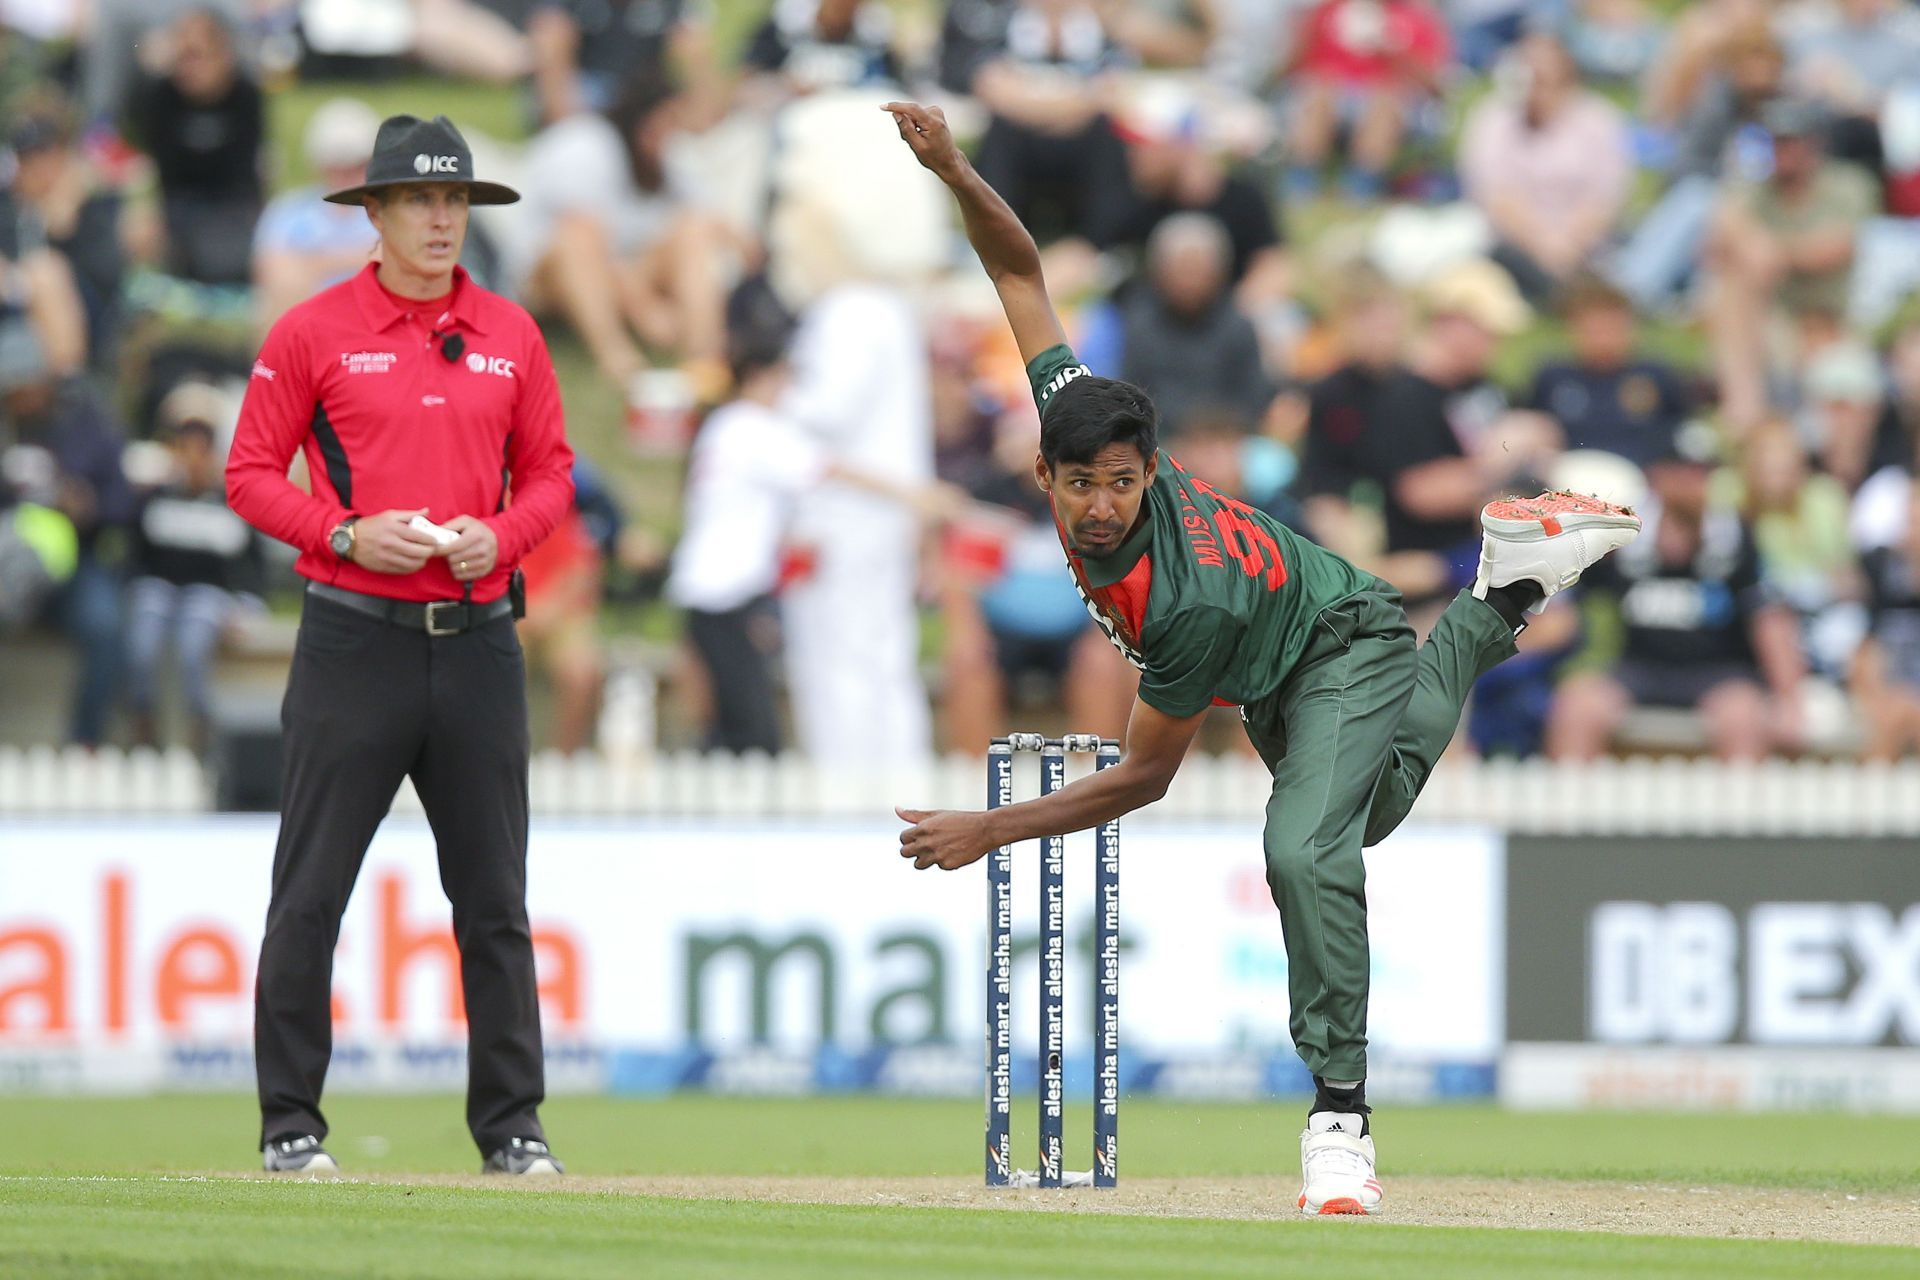 Mustafizur Rahman was the best bowler for Bangladesh this year